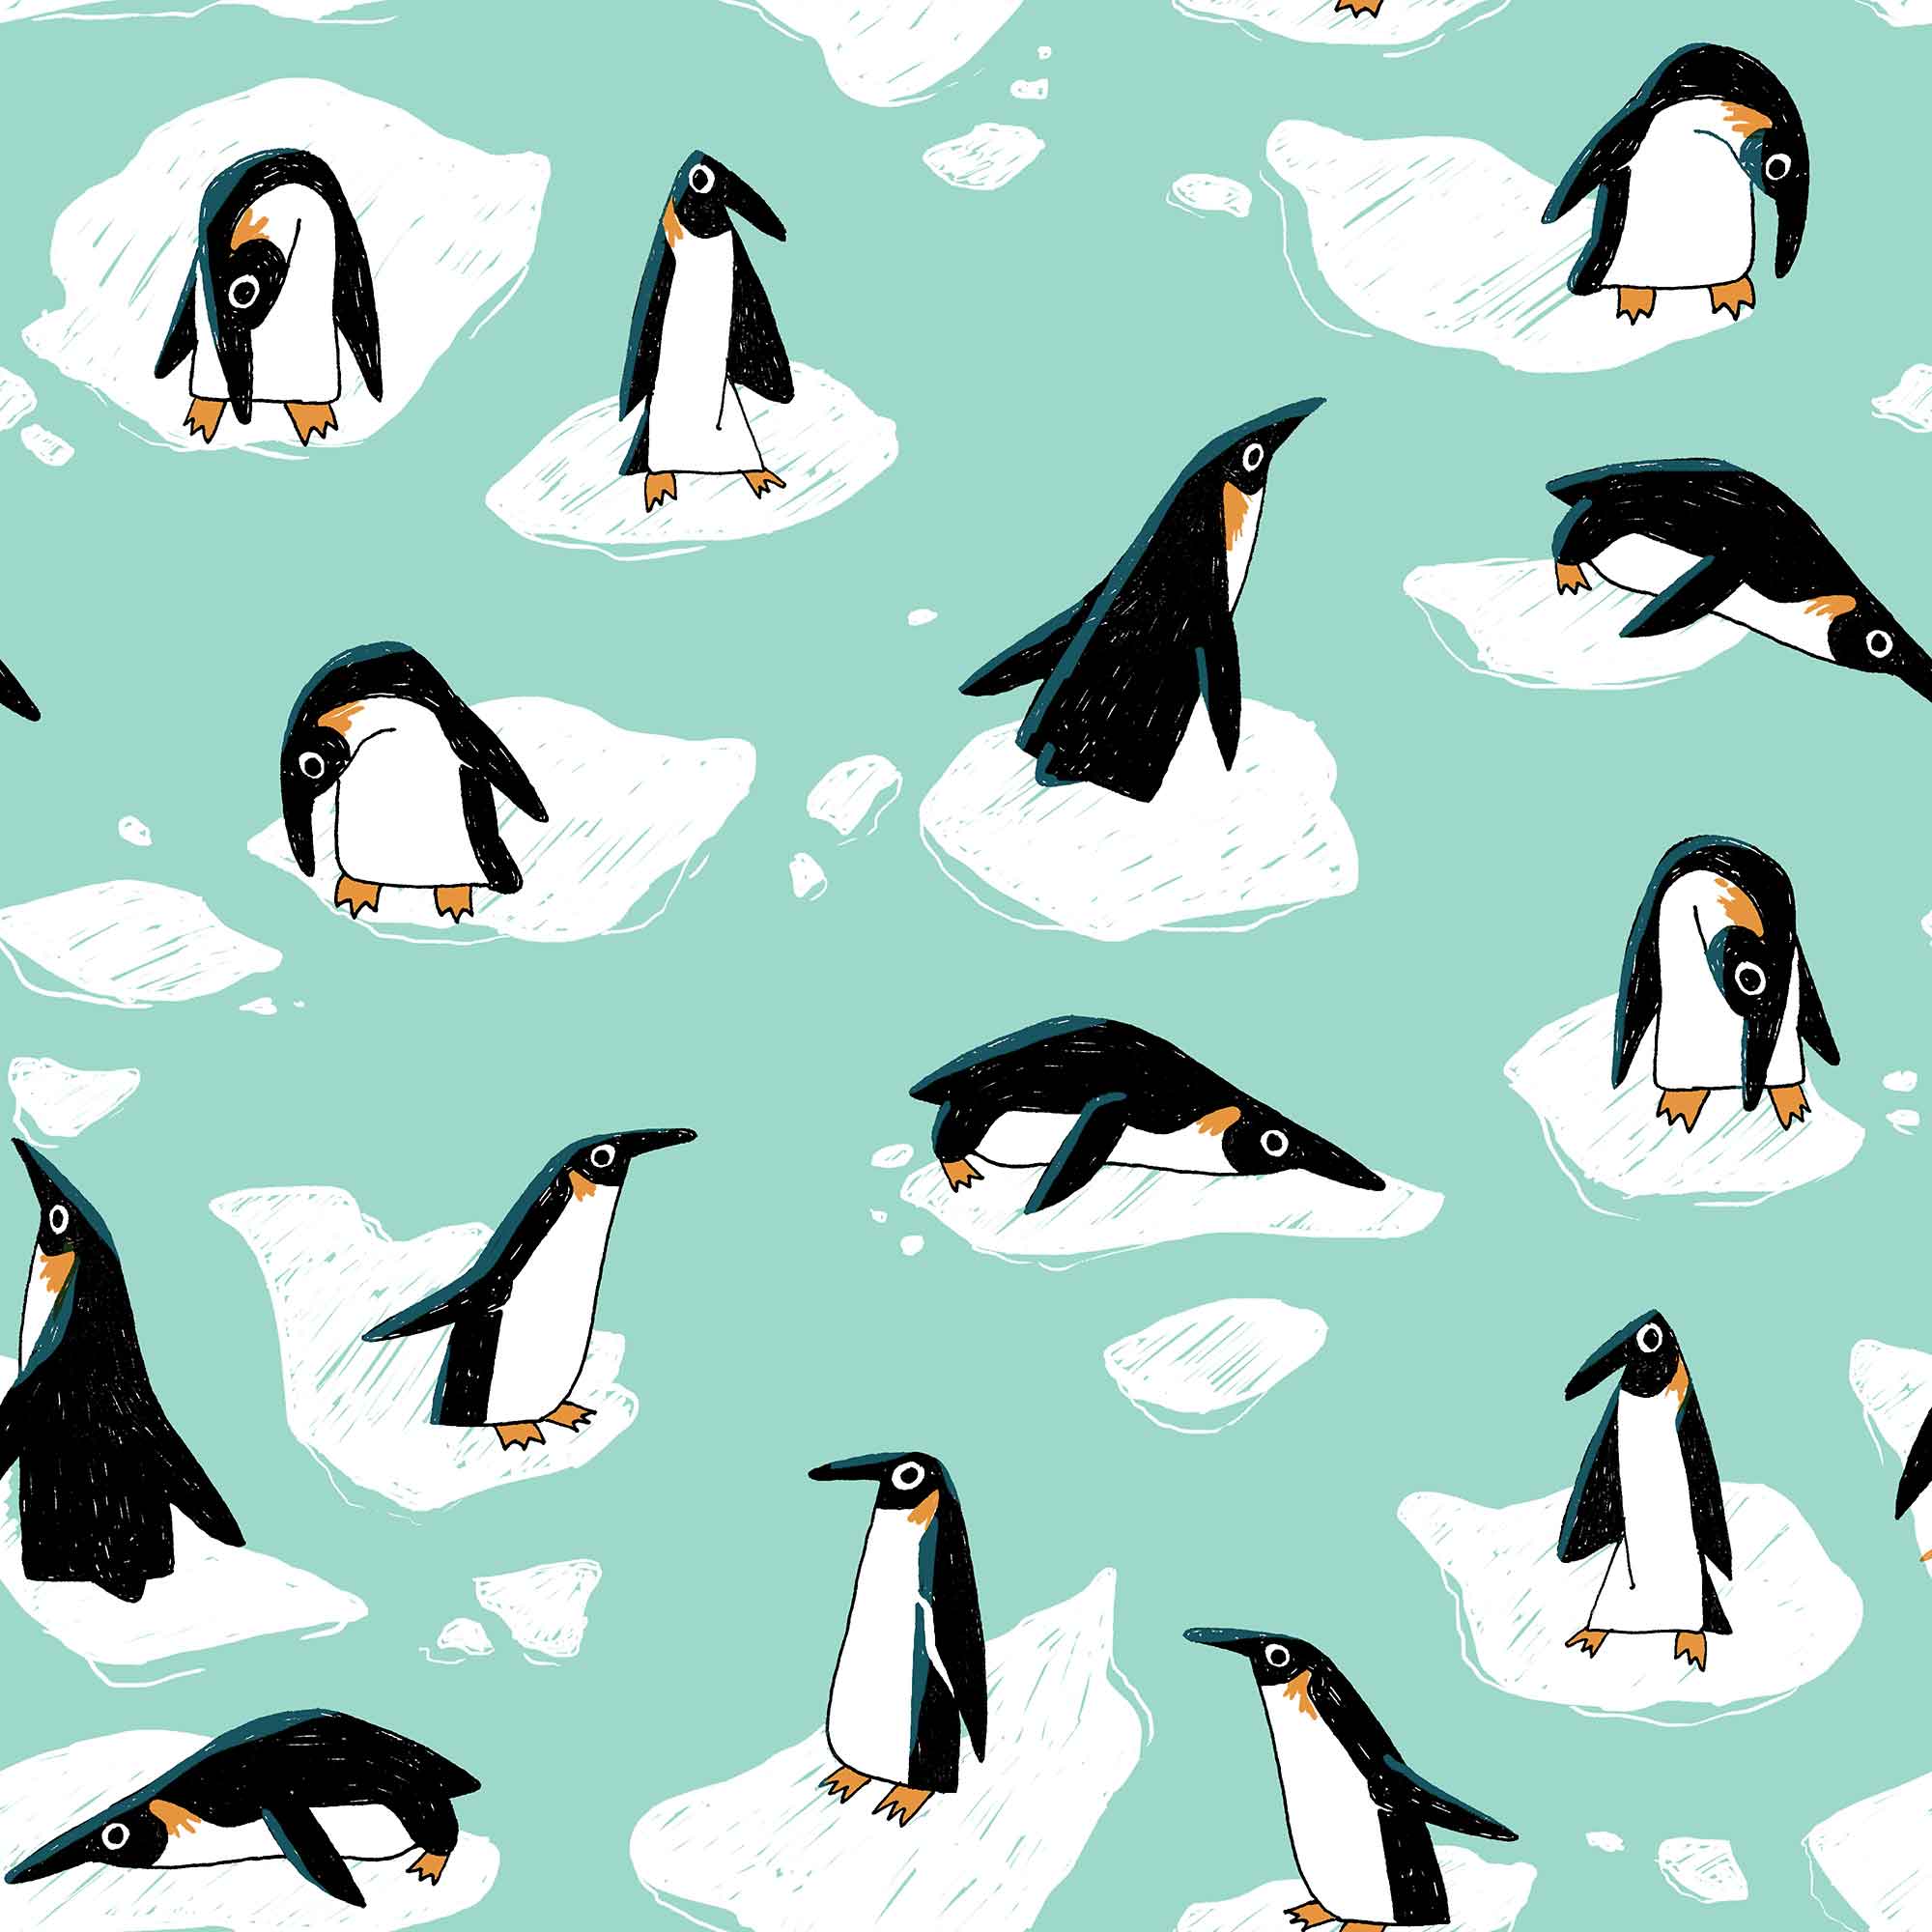 Repeat print of penguins designed by Liz Broekhuyse